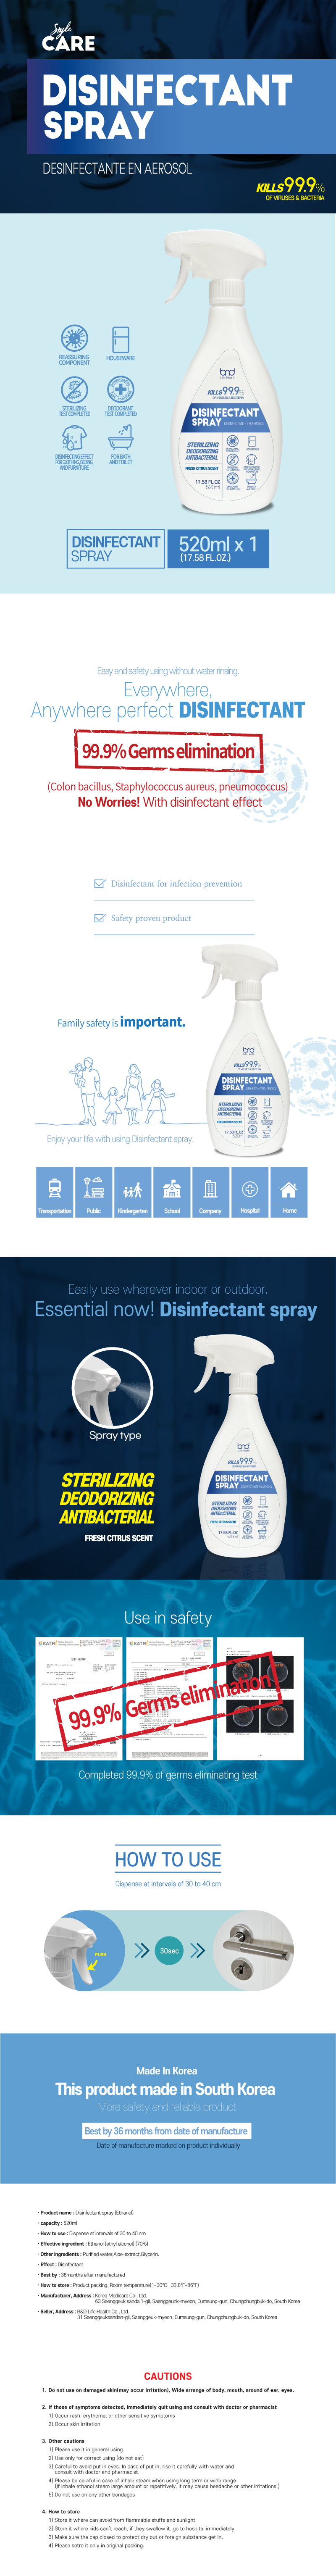 Disinfectant_spray_520%28en%29_d.jpg